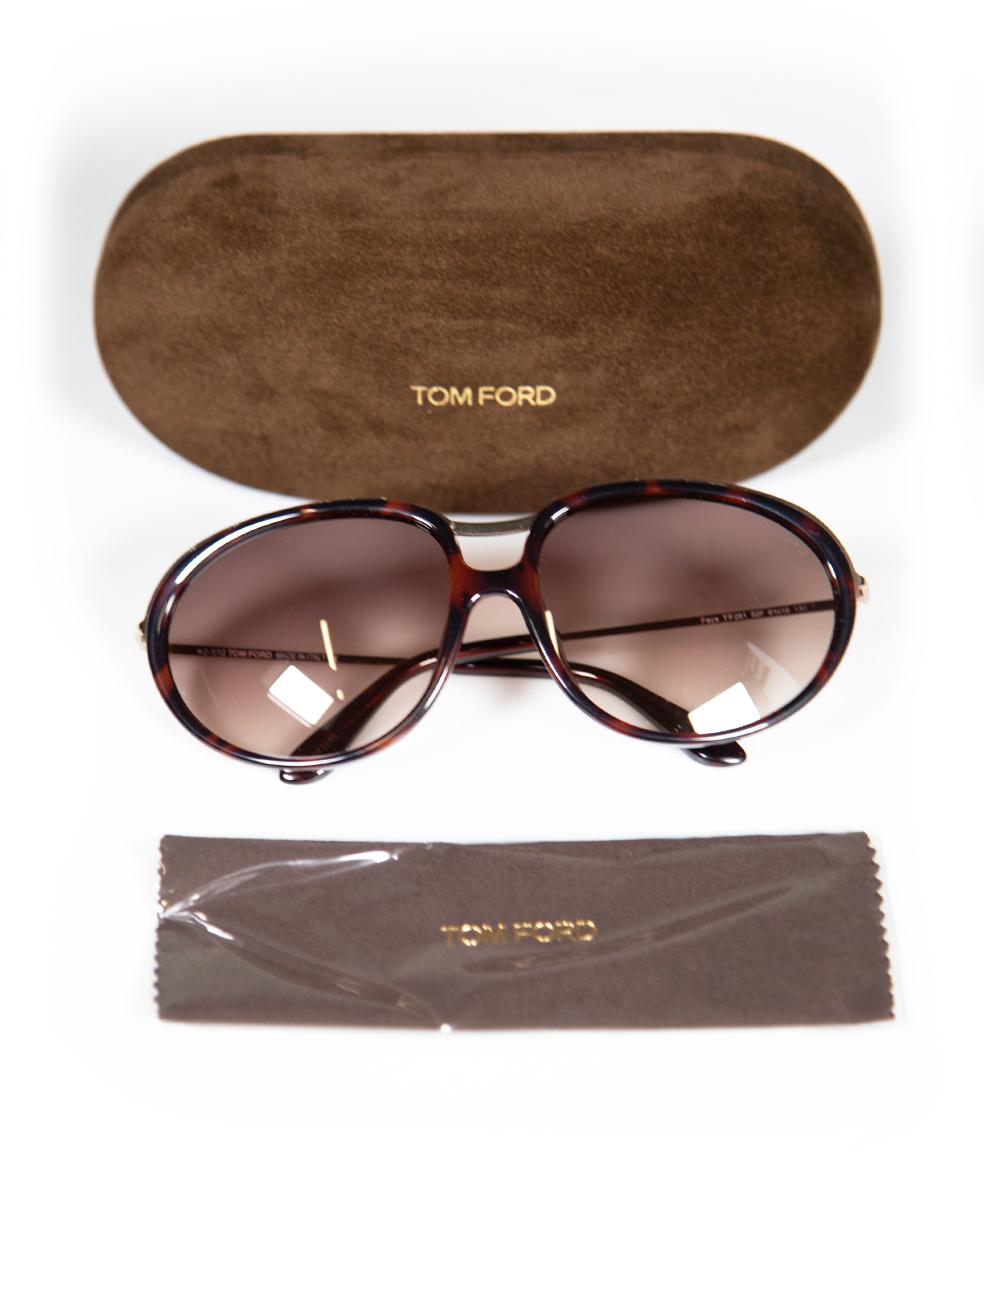 Tom Ford Dark Havana Gradient Sunglasses For Sale 4